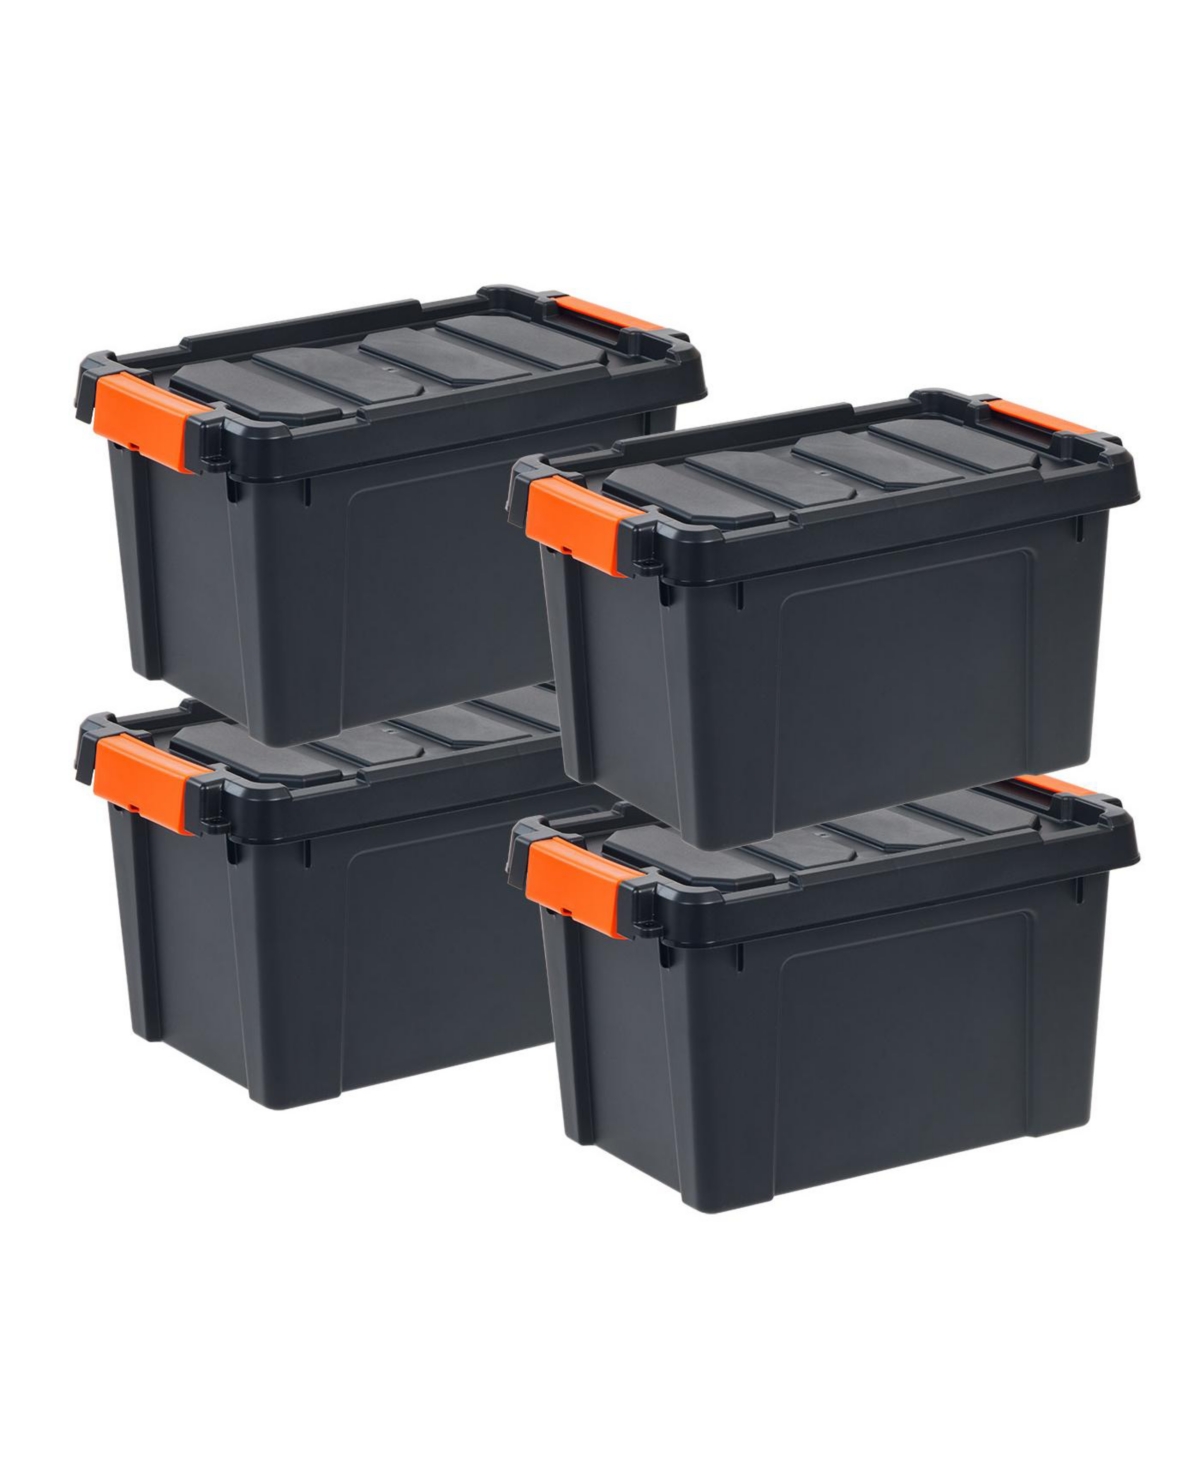 22 Quart Heavy Duty Plastic Storage Box, Black, 4 Pack - Black